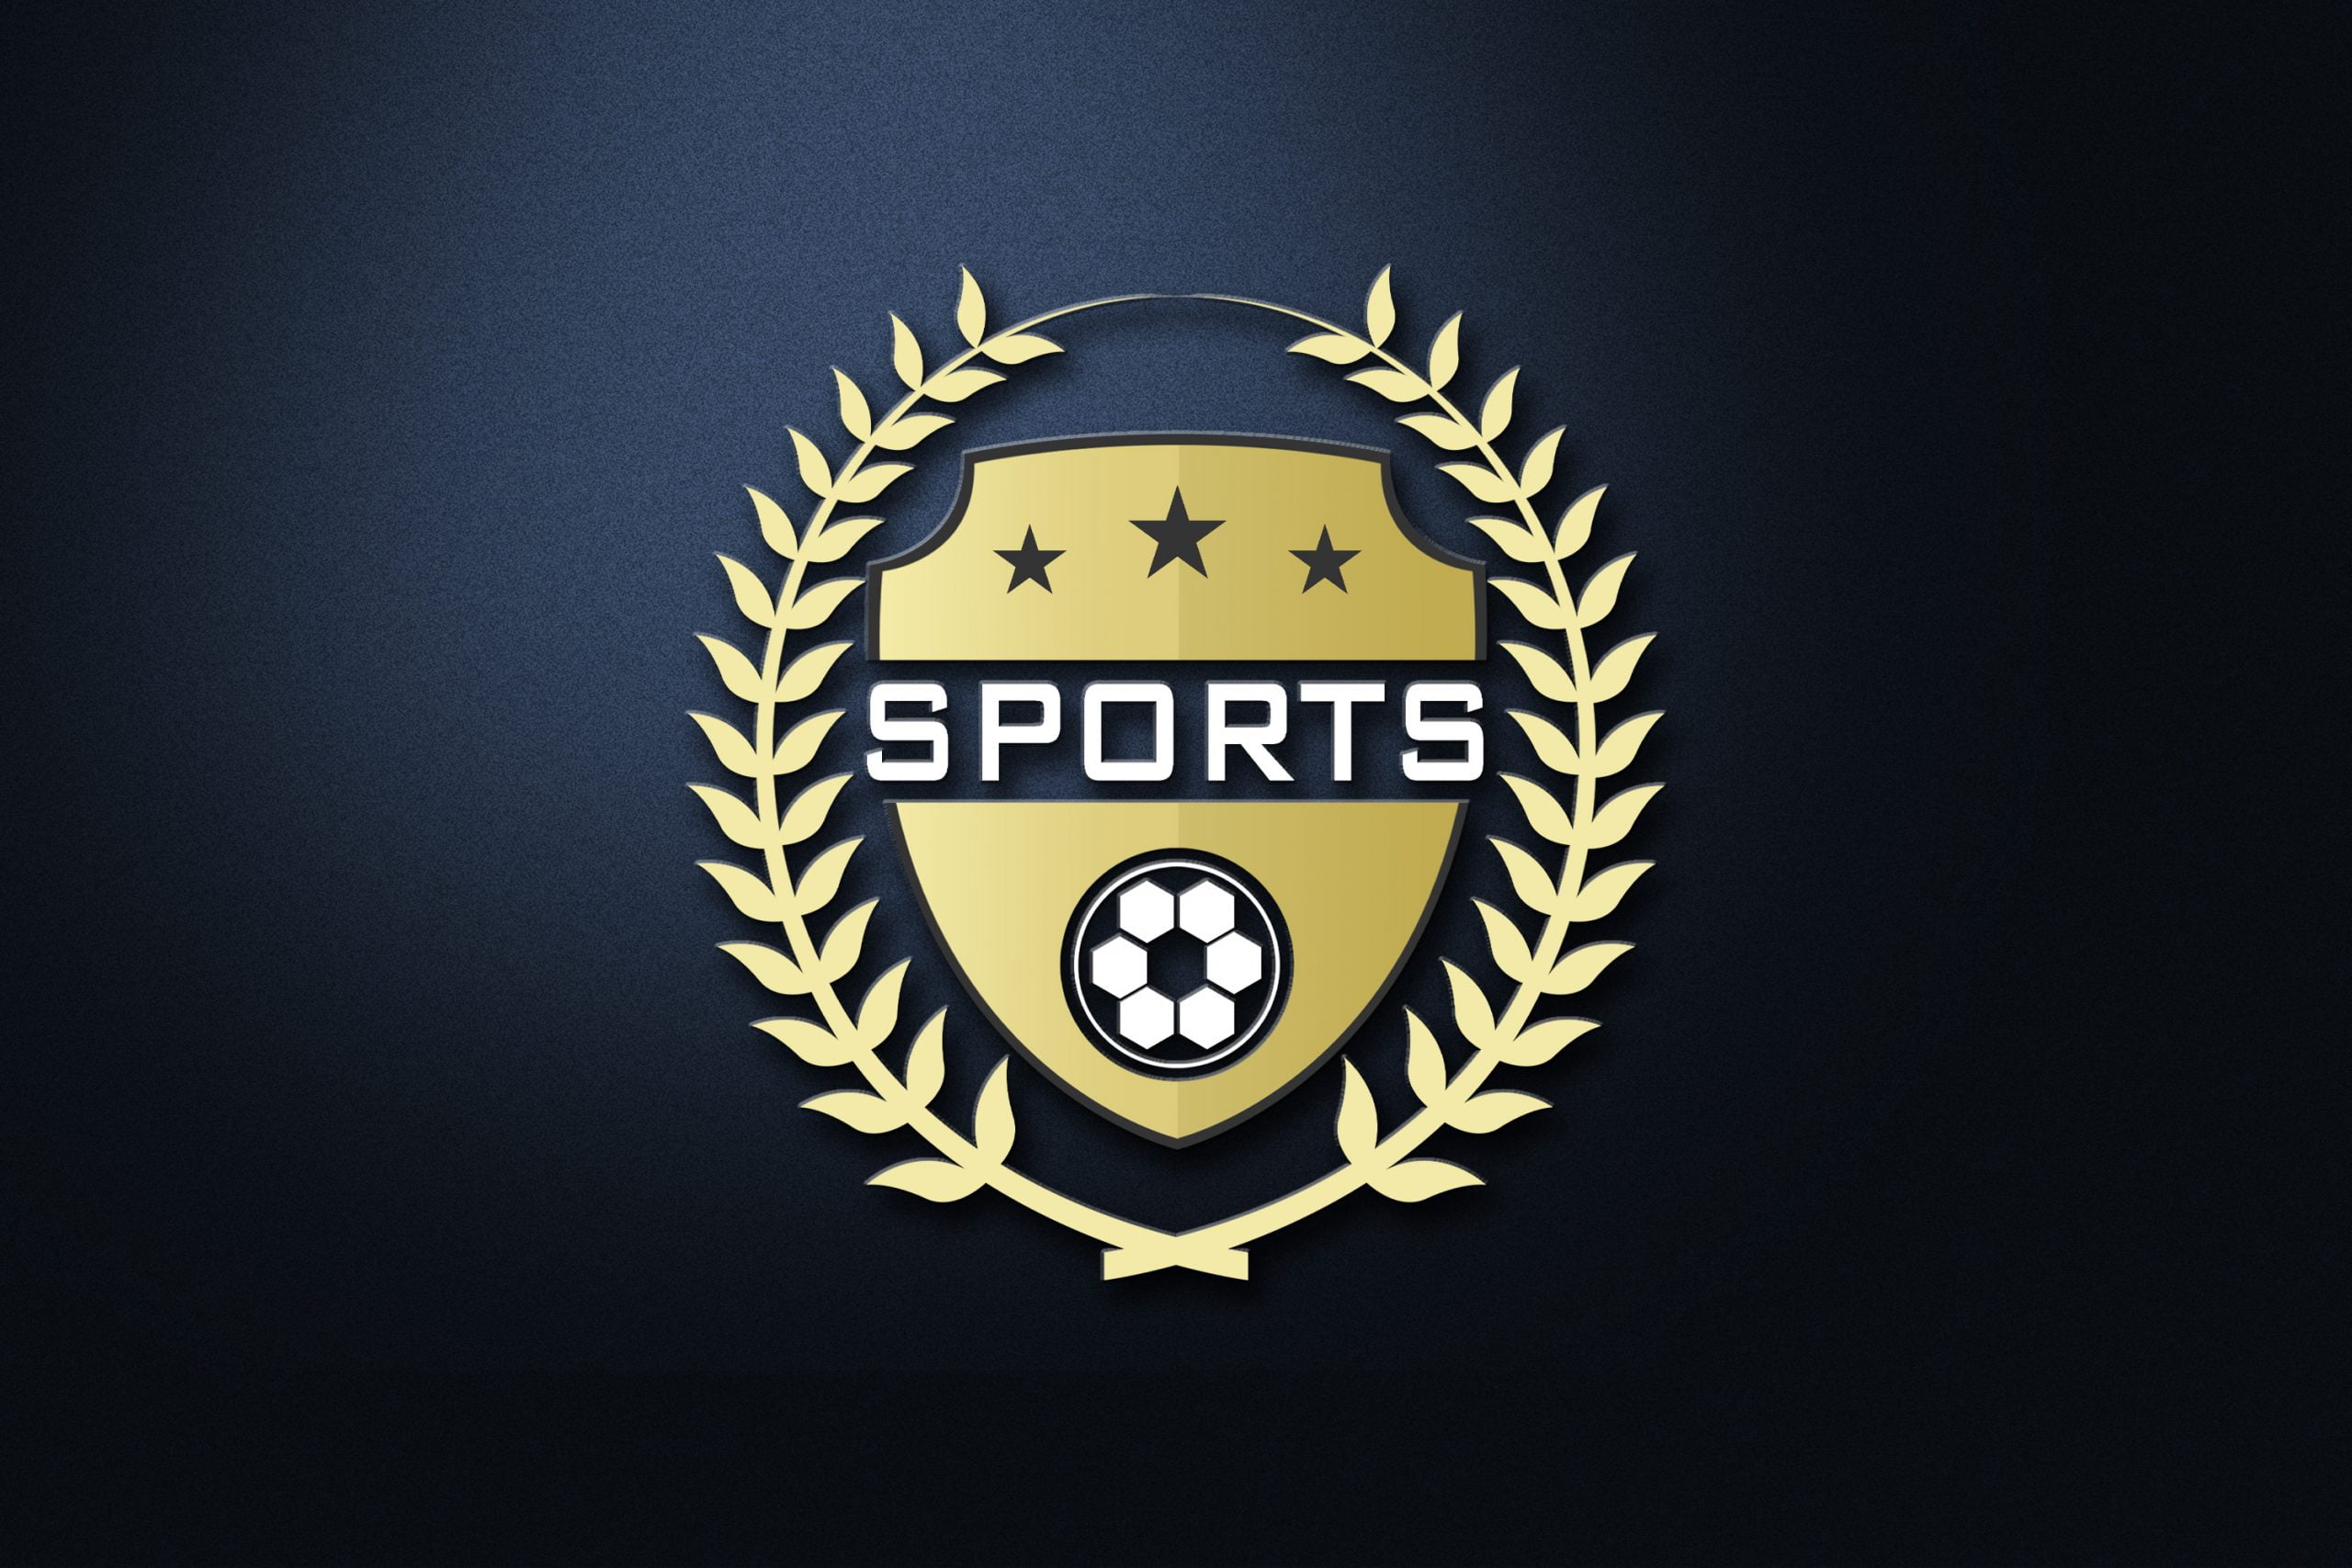 Football Club Emblem Logo Template Free Download